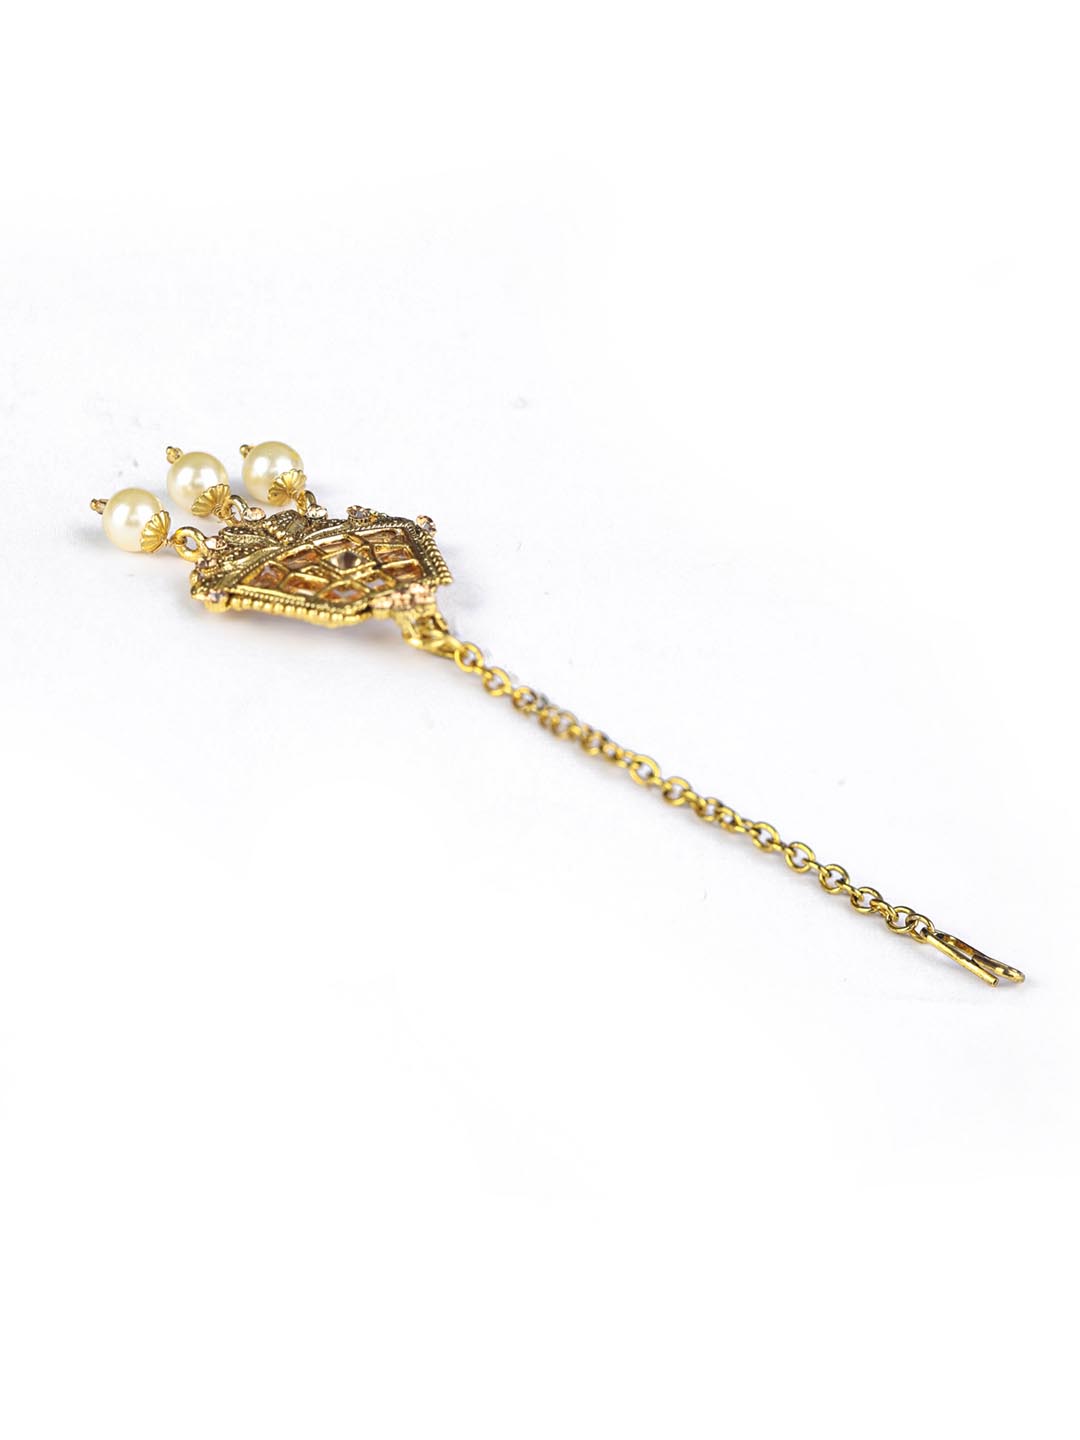 Online Gold Jewellery - Everest Jewellery